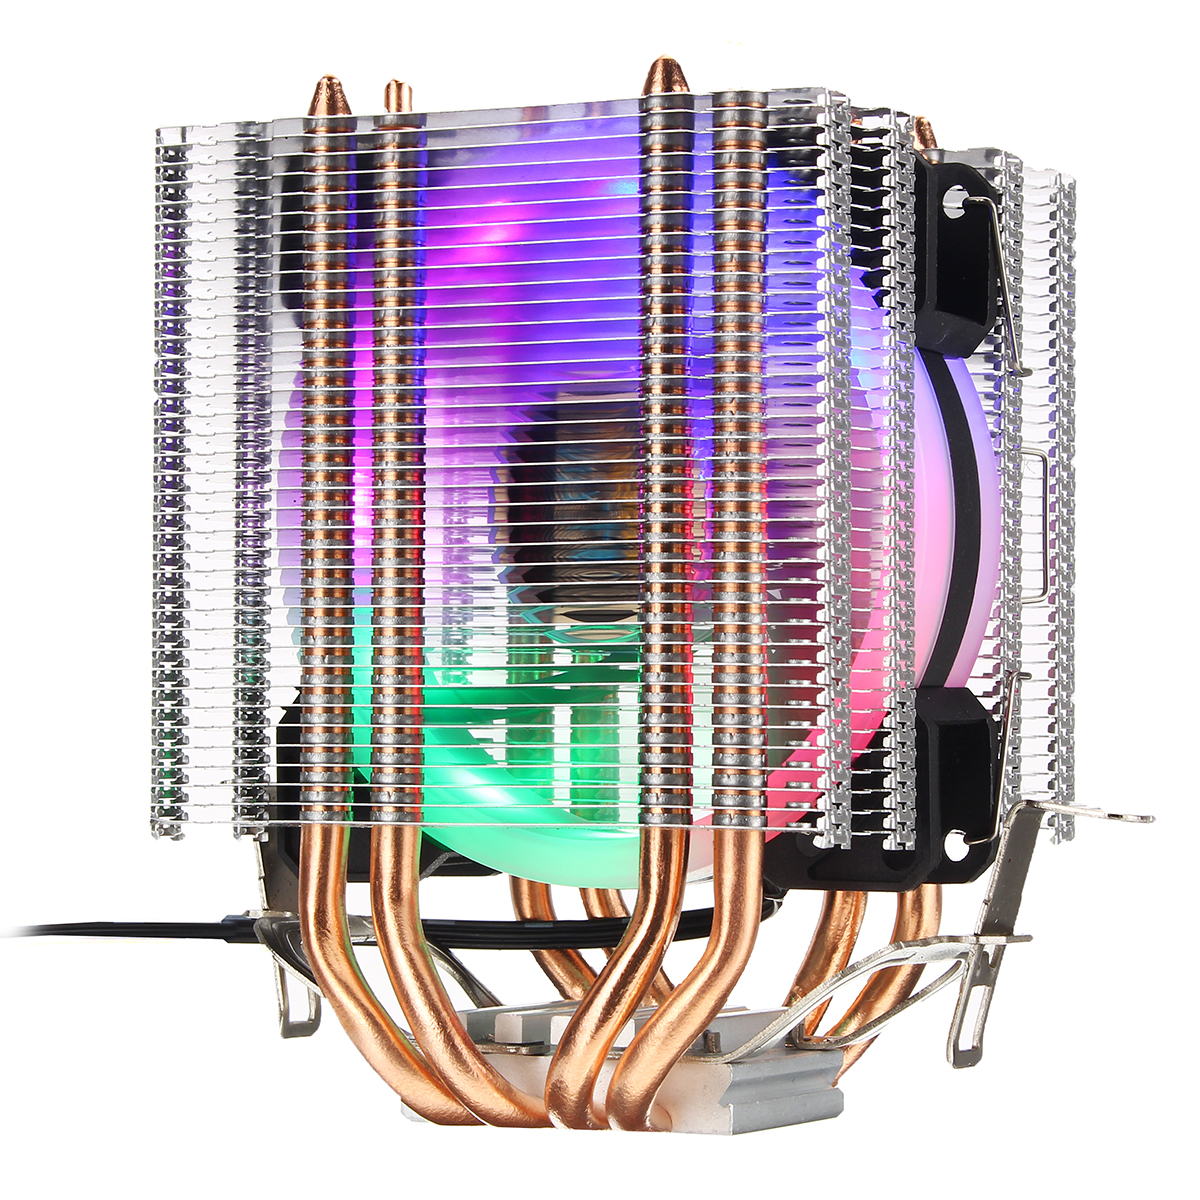 

Aurora Colorful Backlit 3 Pin Single Fan 4 Copper Tube Dual Tower CPU Cooling Fan Cooler Heatsink for Intel AMD